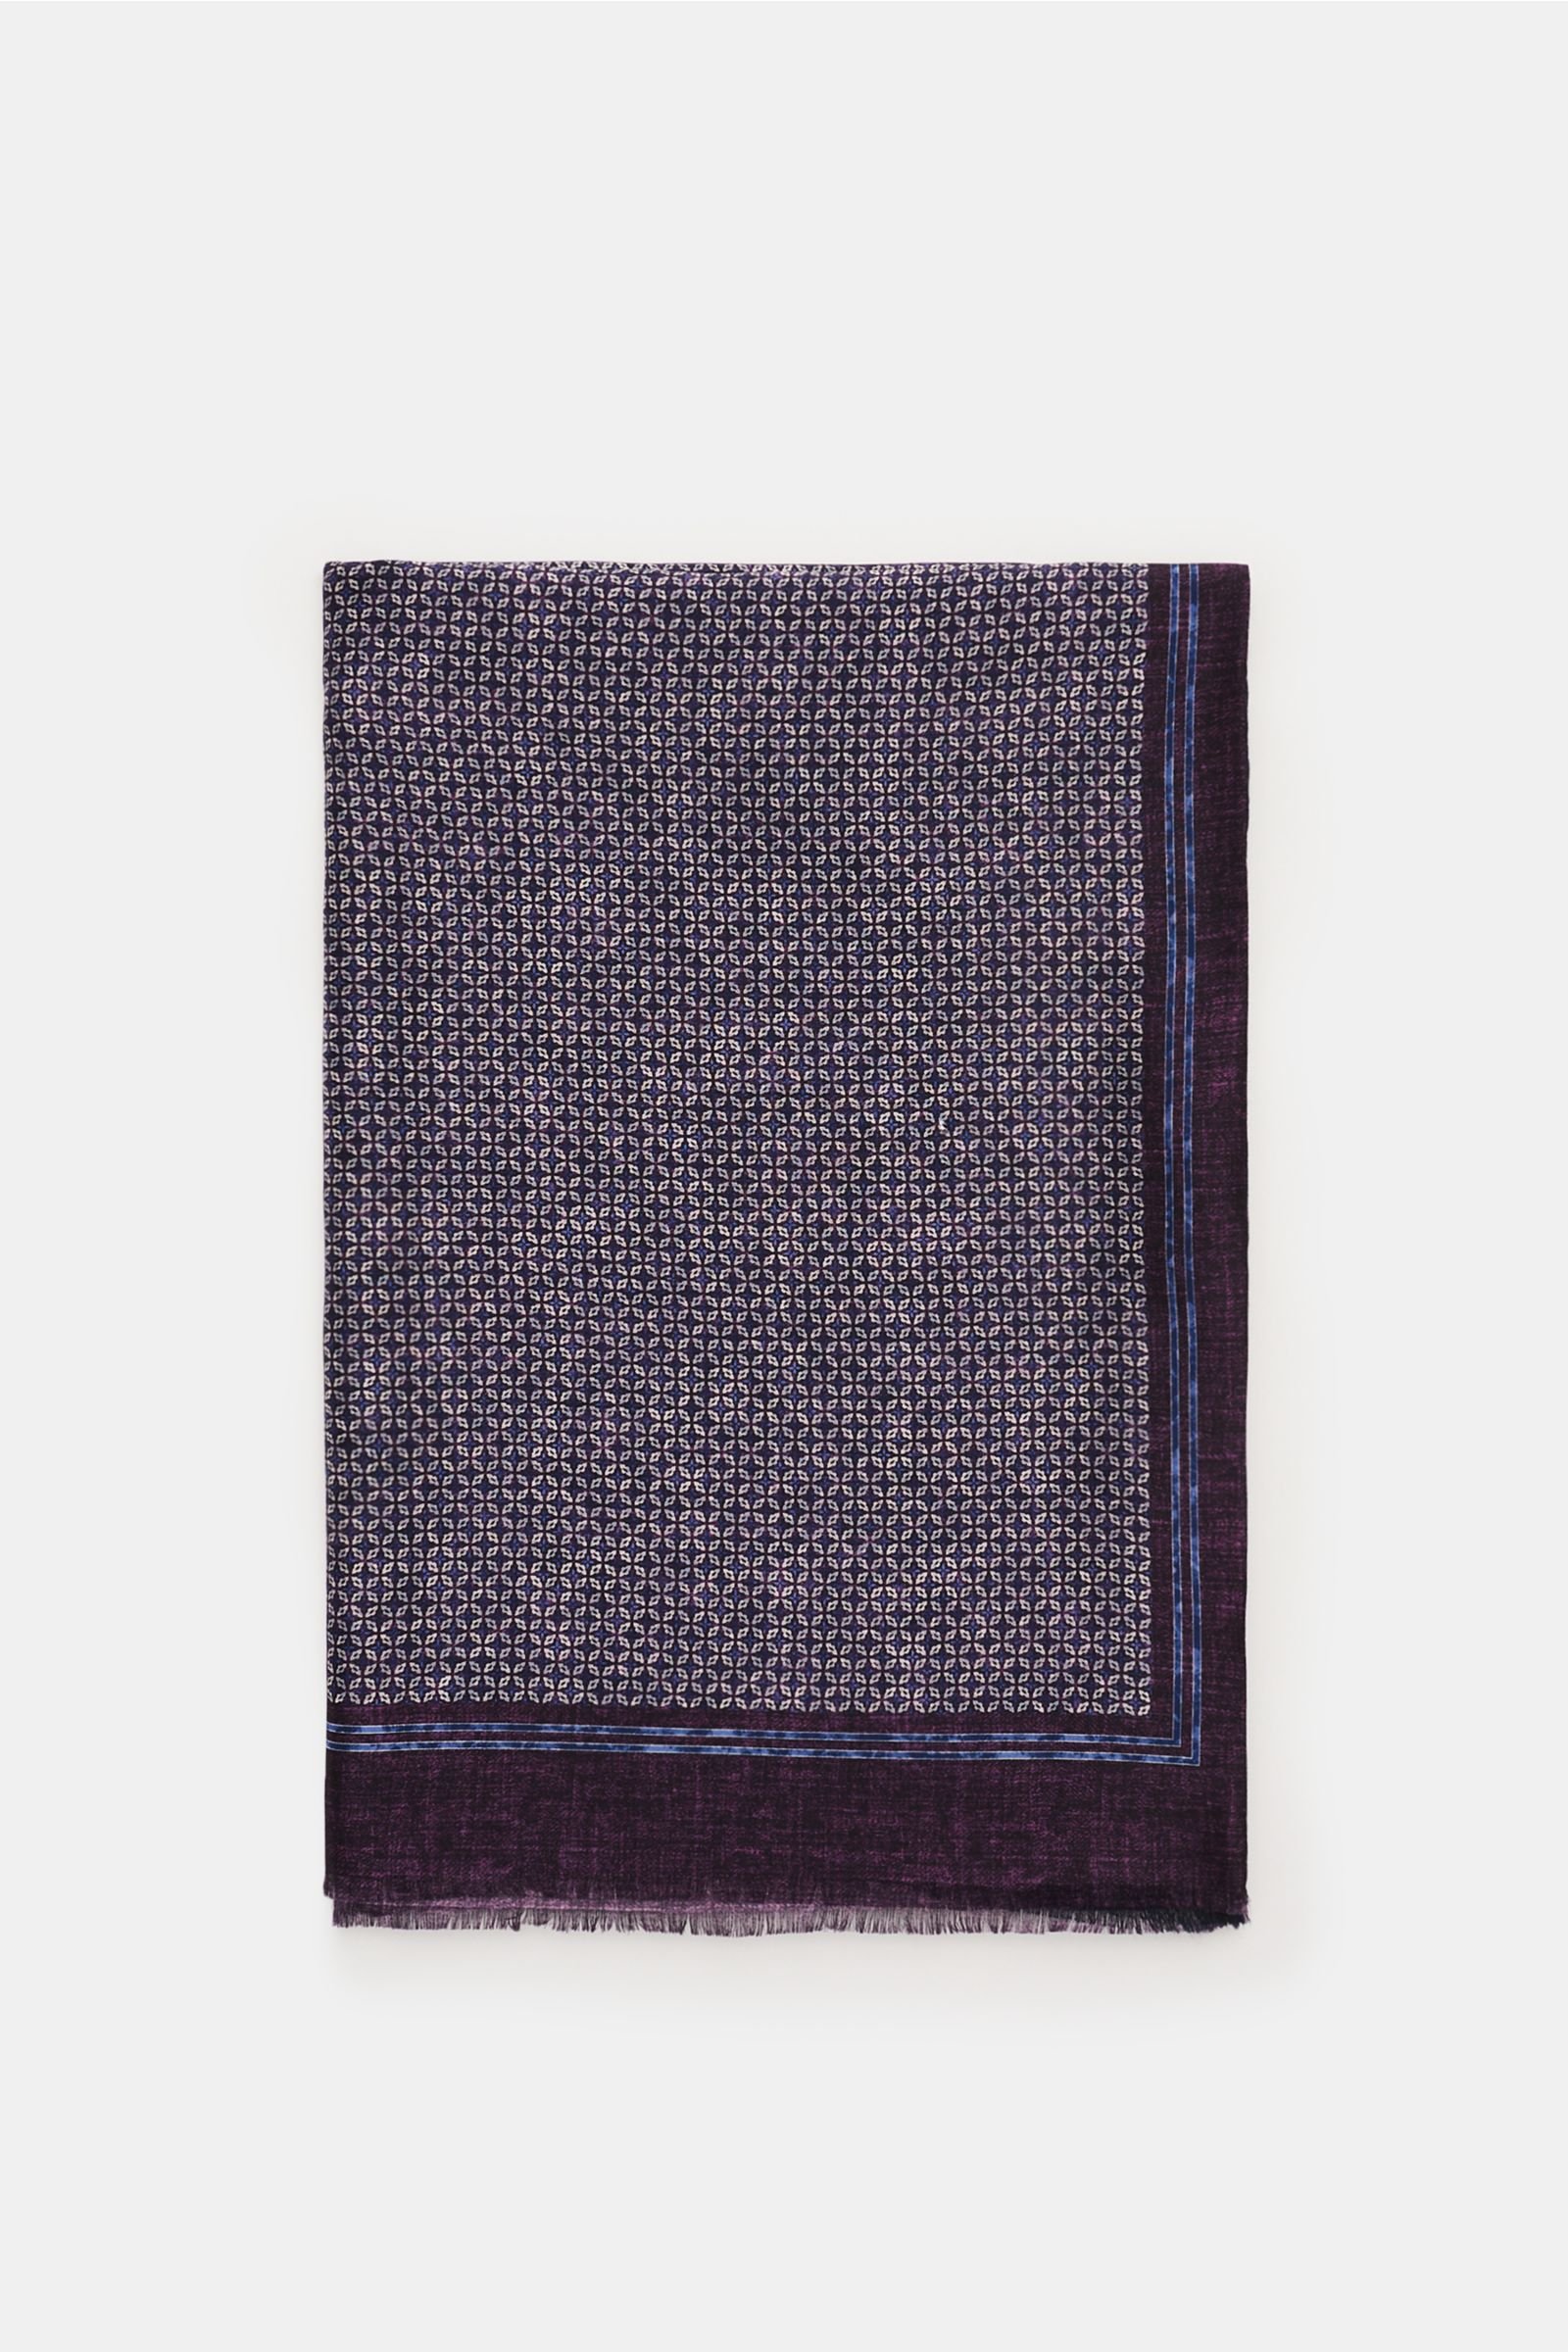 Scarf 'Corvara' violet/navy, patterned